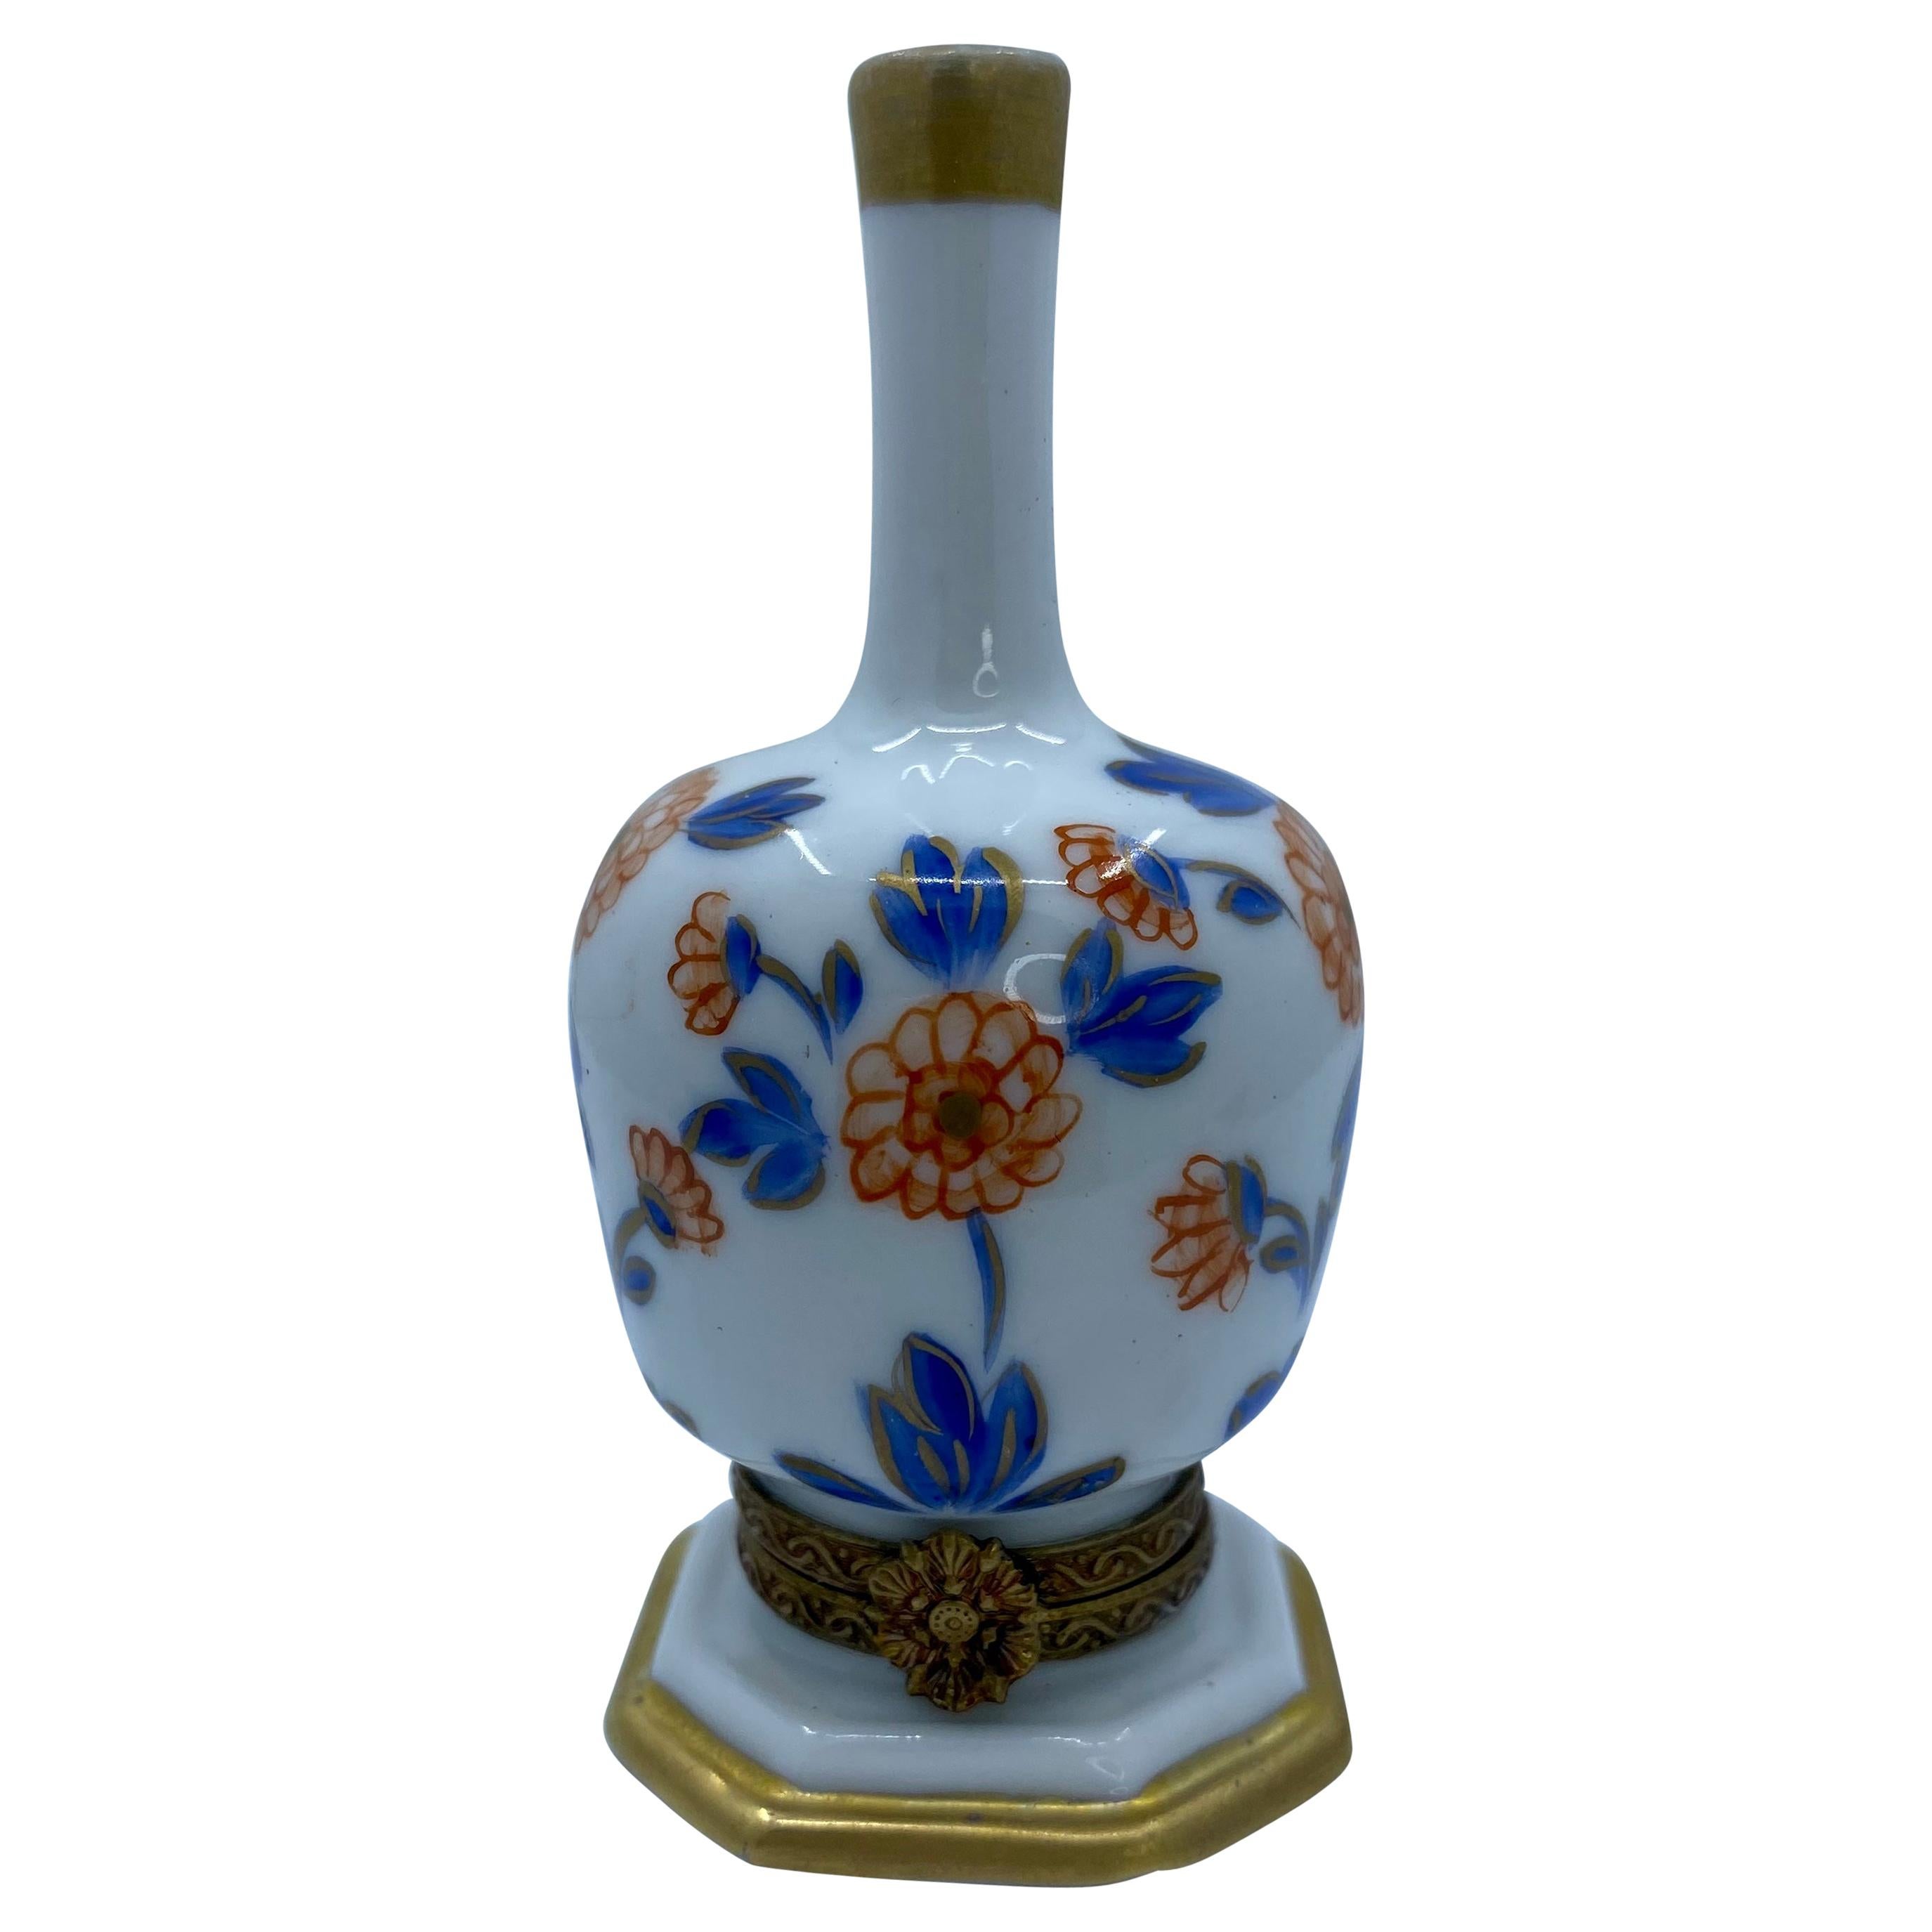 Unique Limoges France Hand Painted Porcelain Vase Trinket Box with Floral Motif